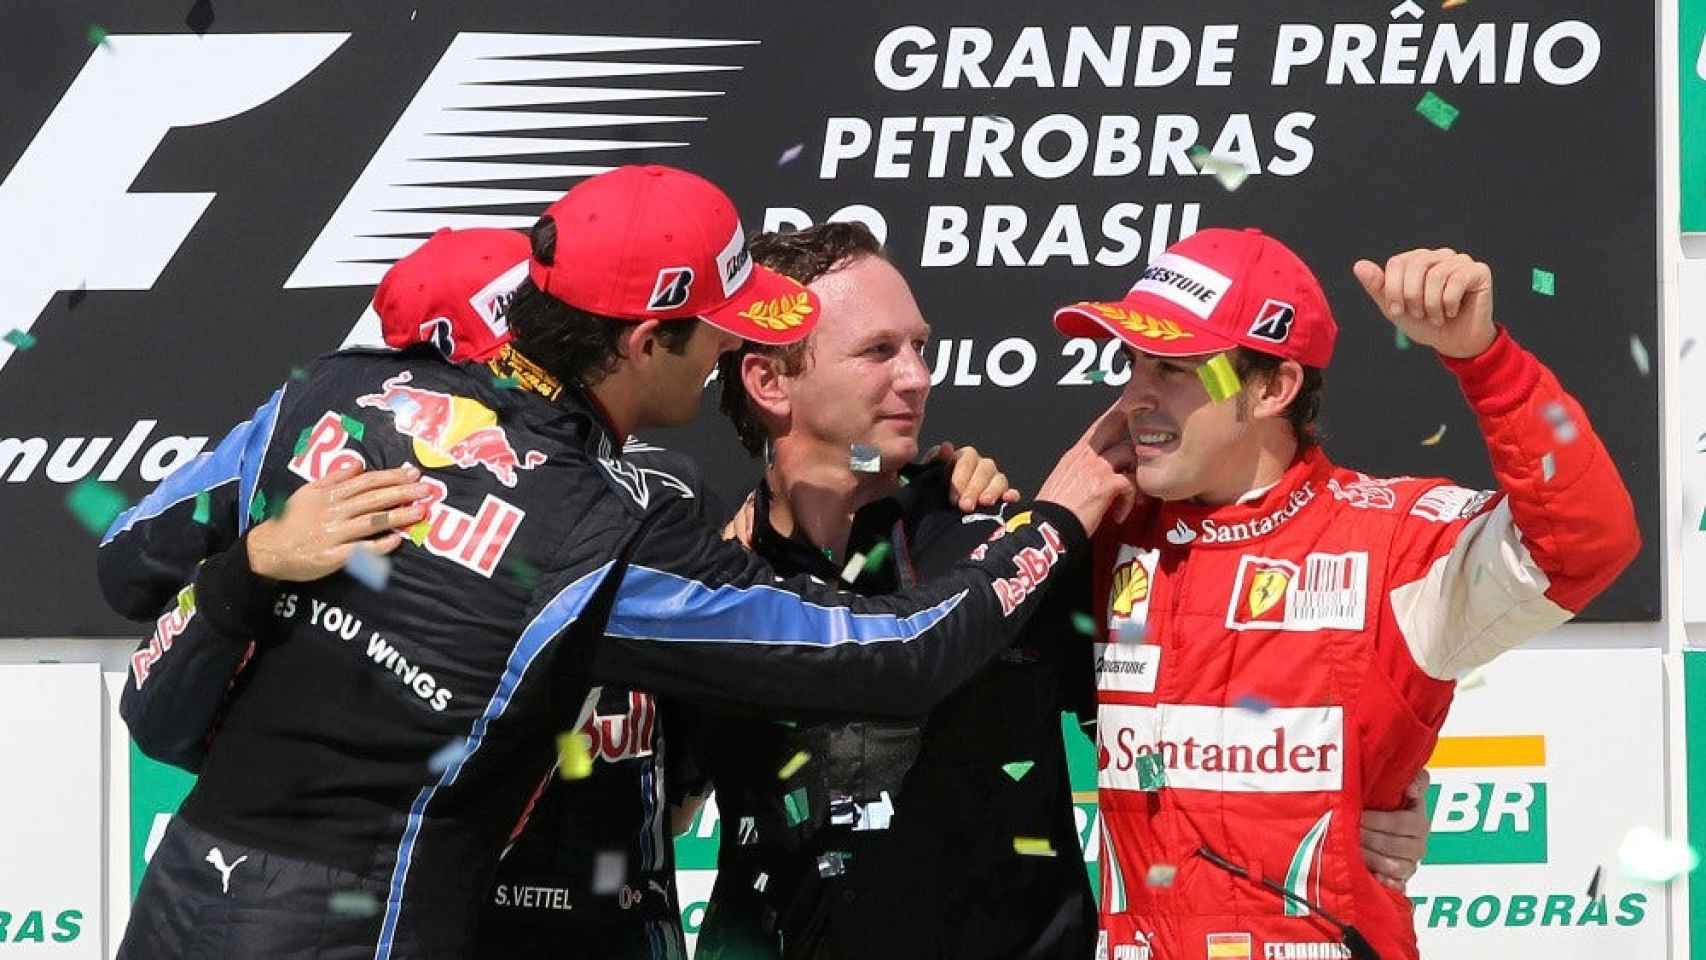 Fernando Alonso y Christian Horner junto a Sebastian Vettel y Mark Webber en el podio del GP de Brasil 2010